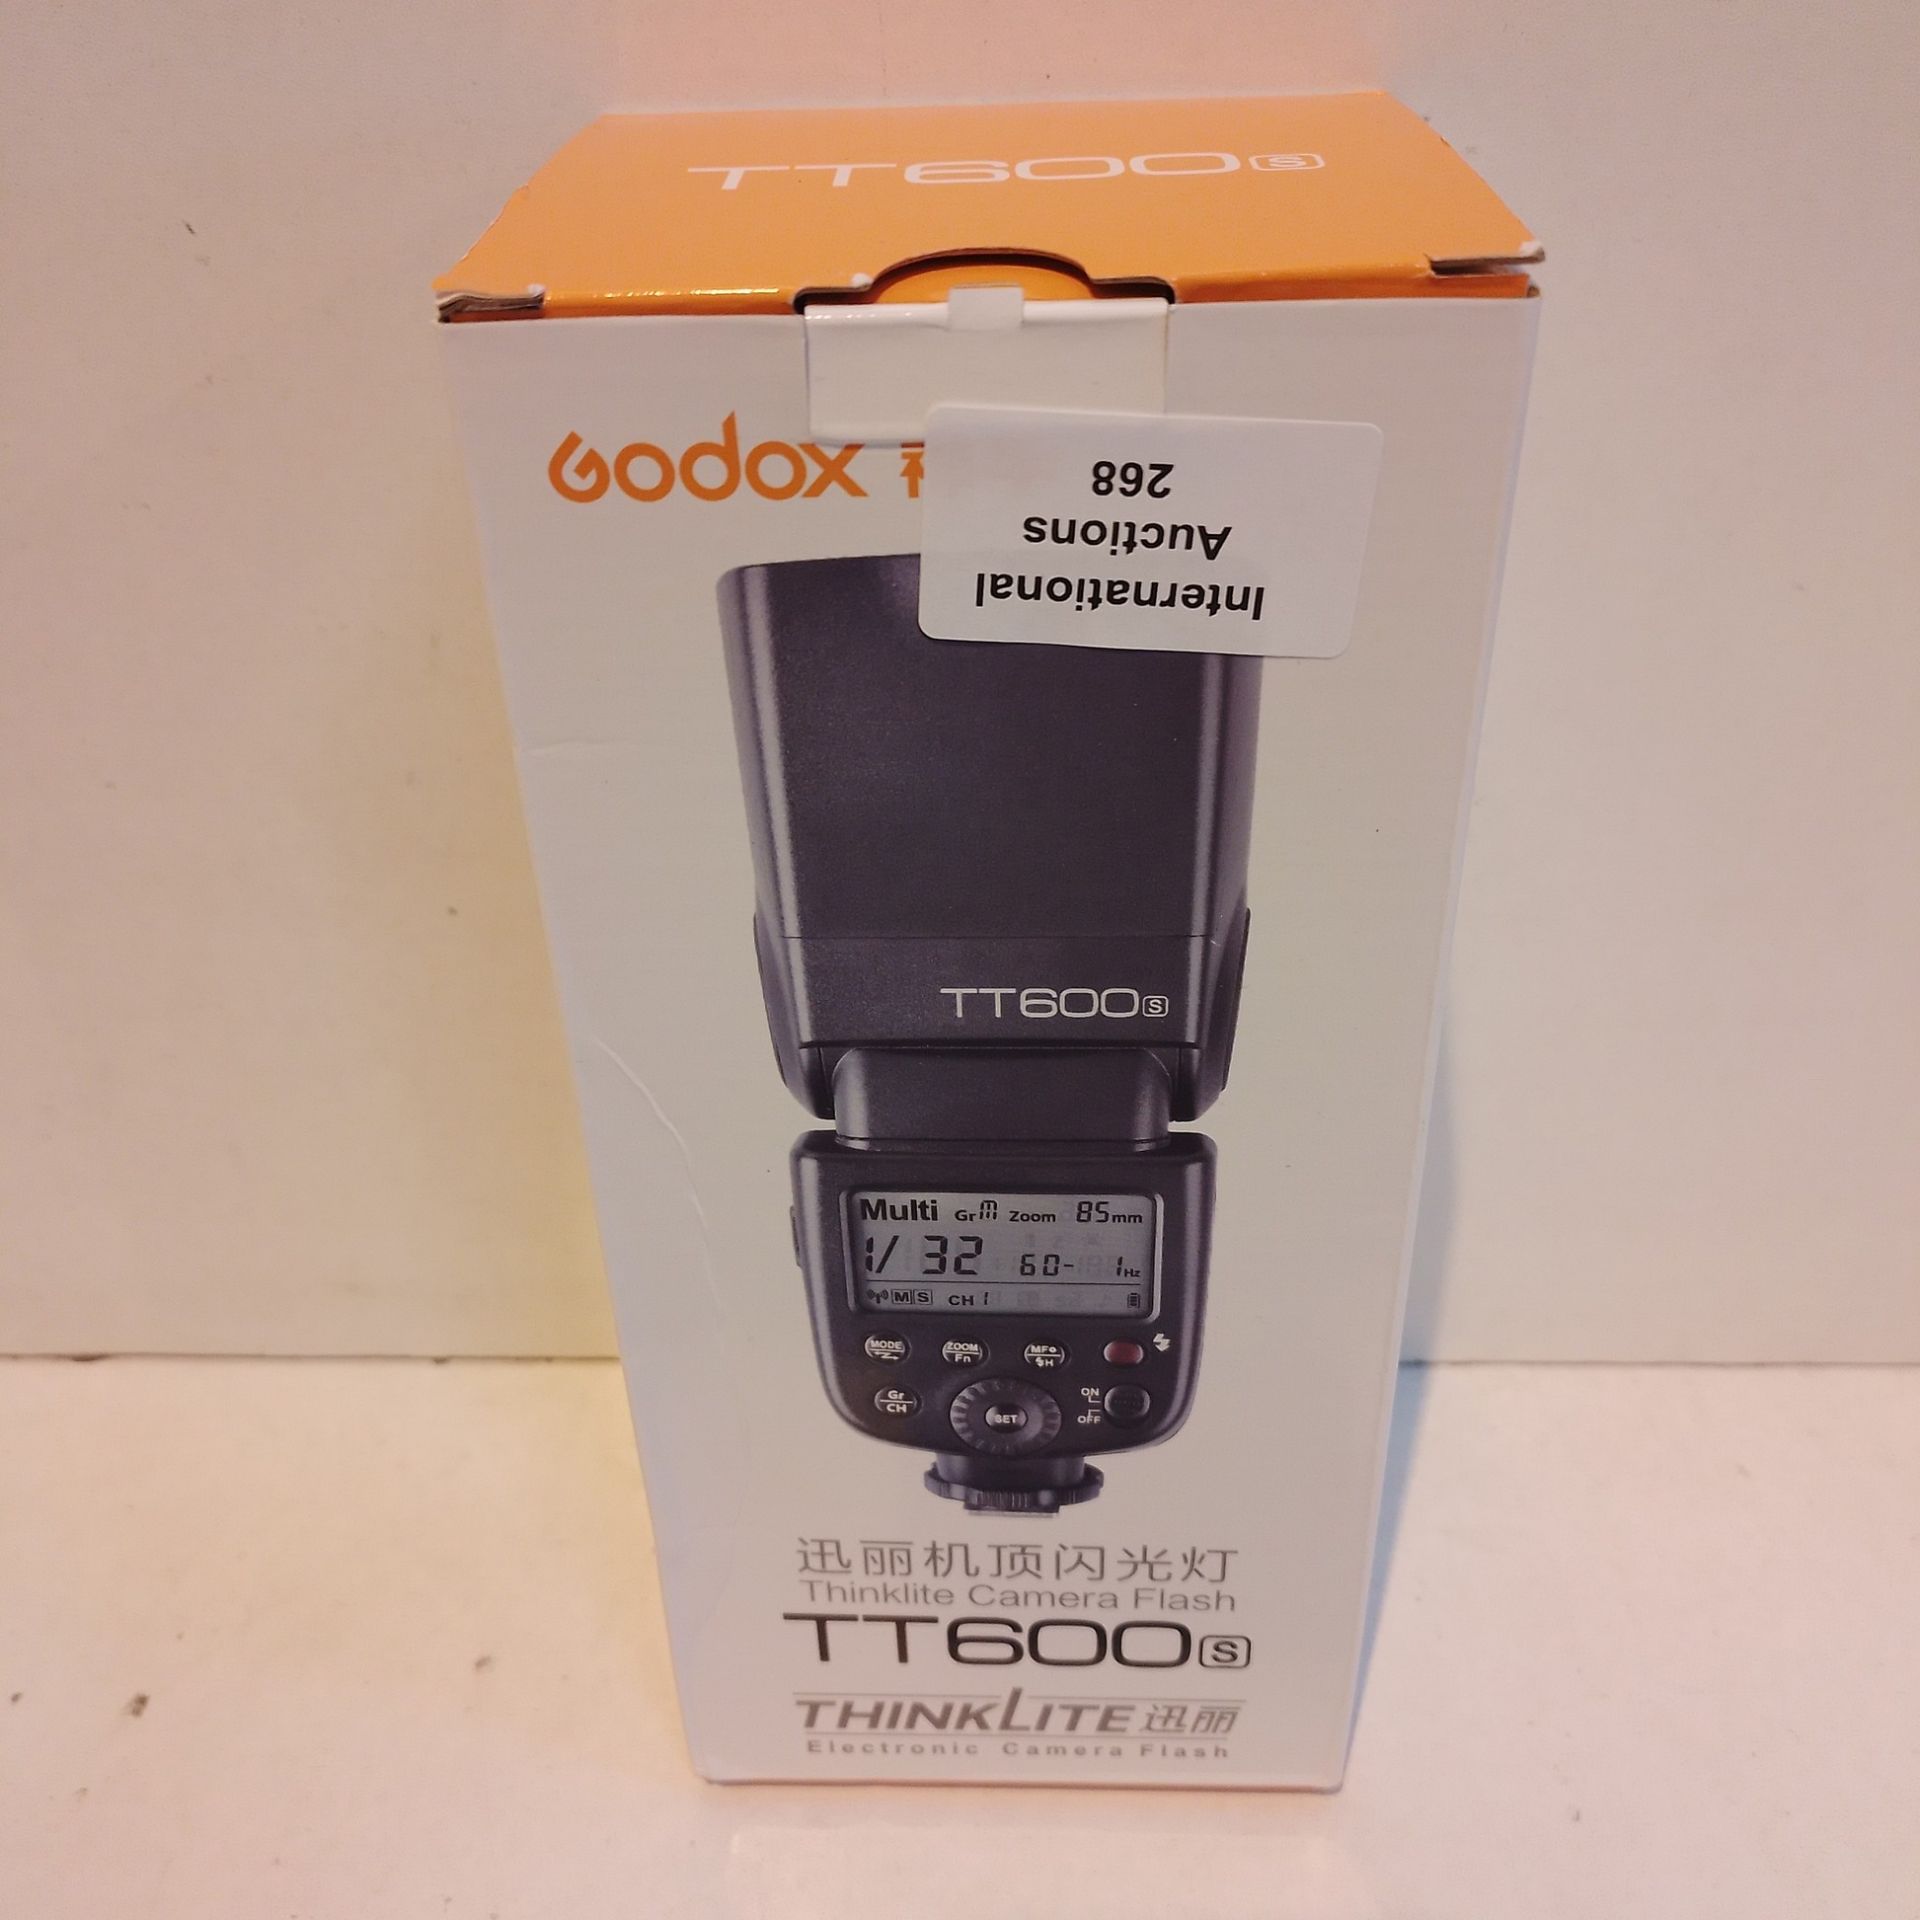 RRP £82.99 Godox TT600S GN60 2.4G Camera Flashgun Speedlite for - Image 2 of 2